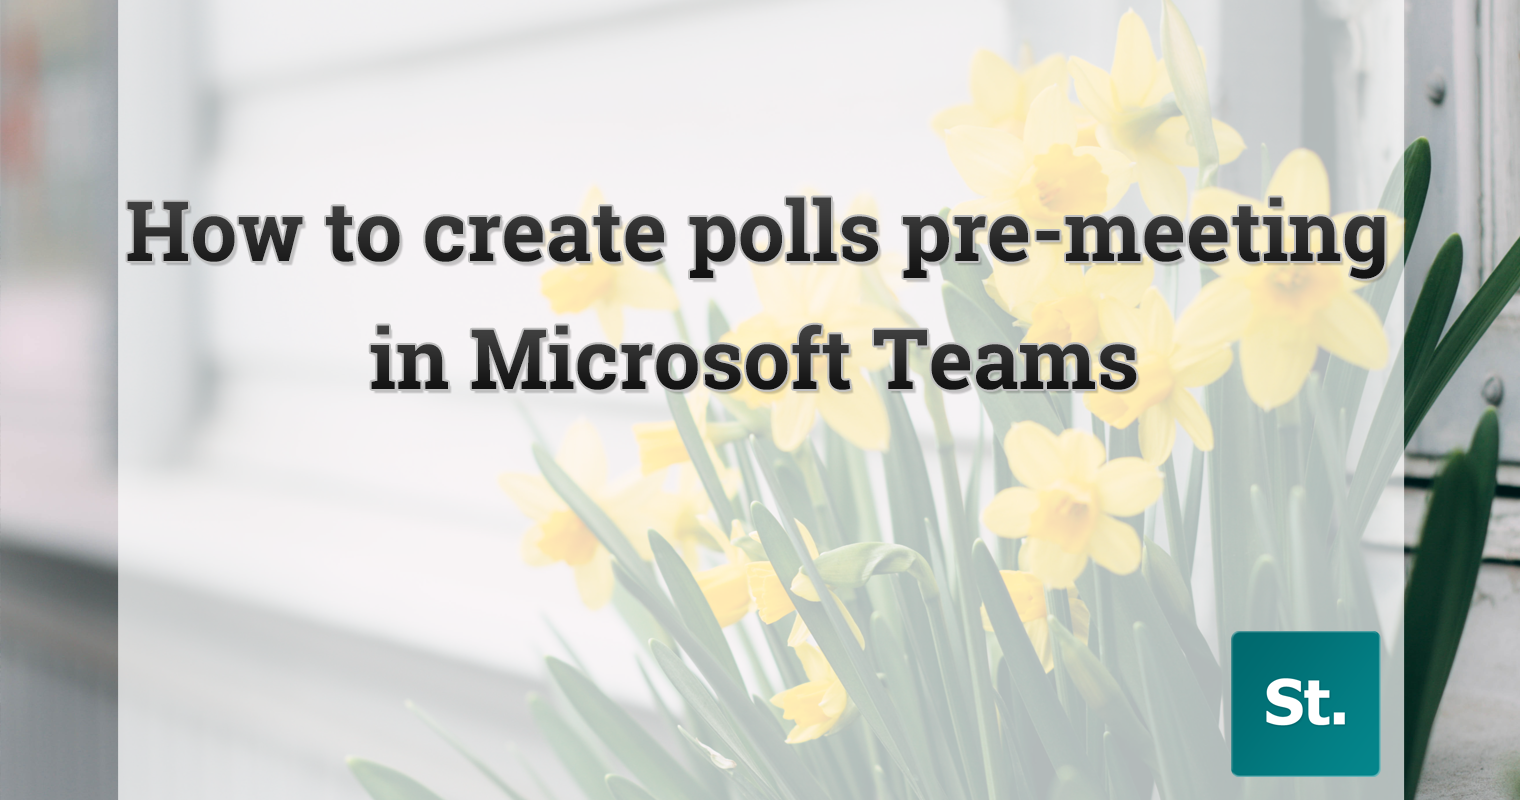 How to create polls pre-meeting in Microsoft Teams